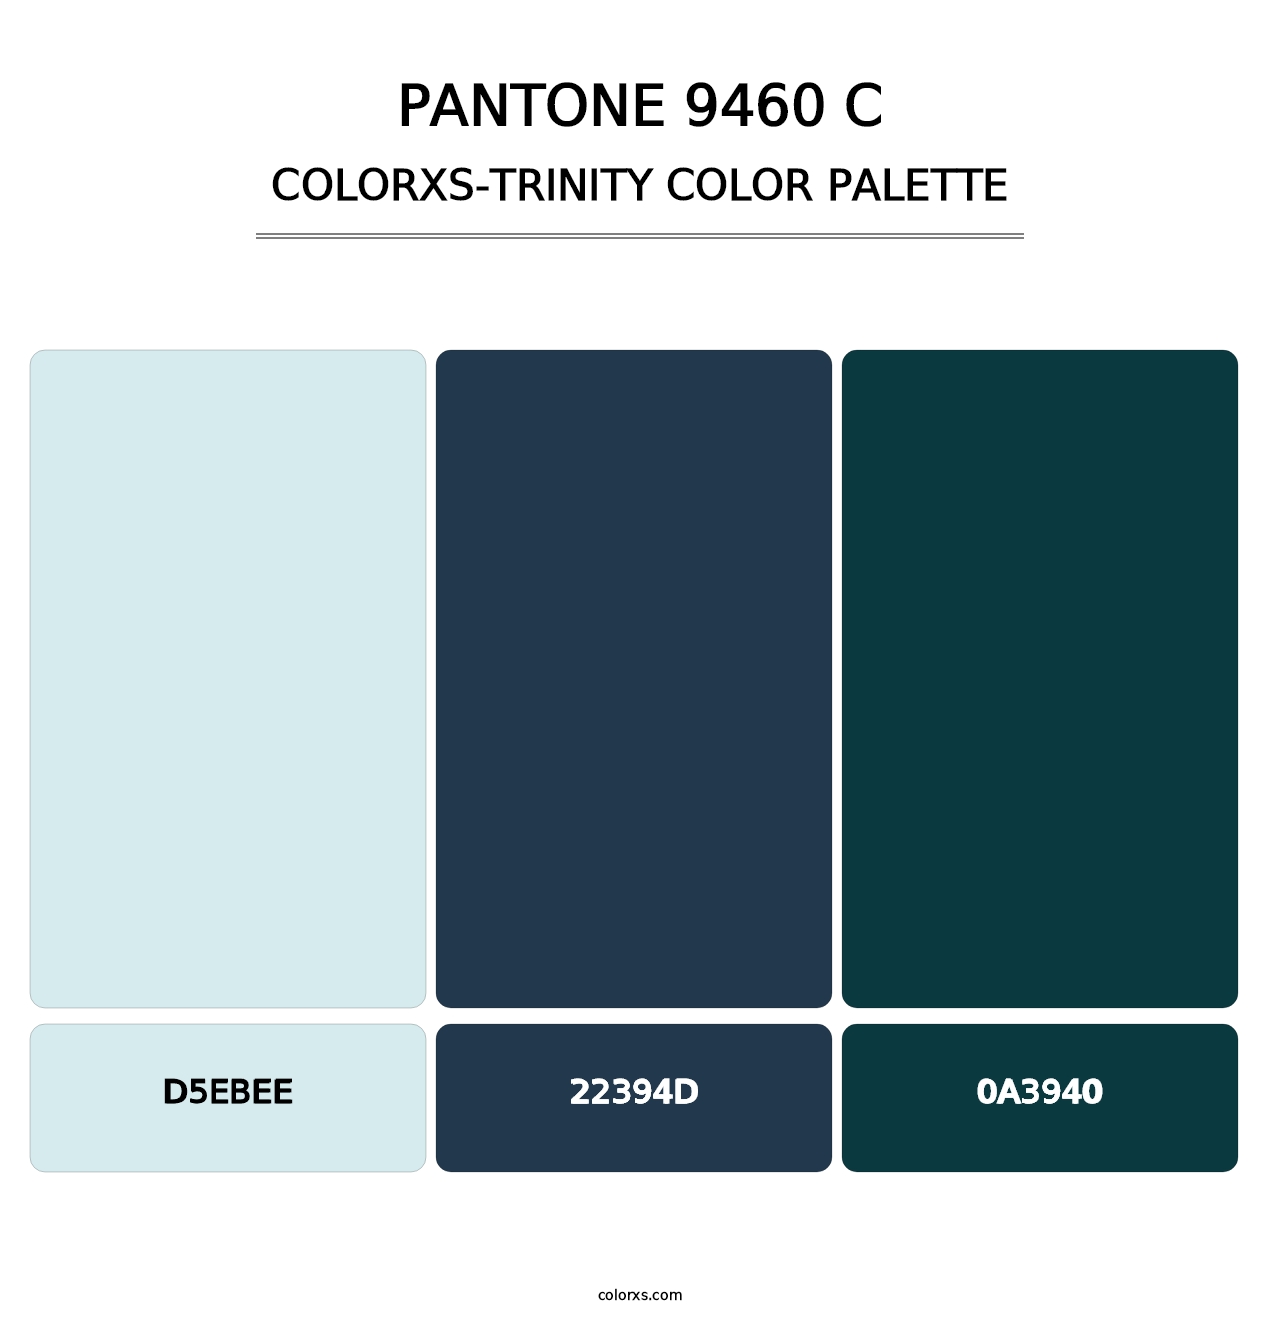 PANTONE 9460 C - Colorxs Trinity Palette